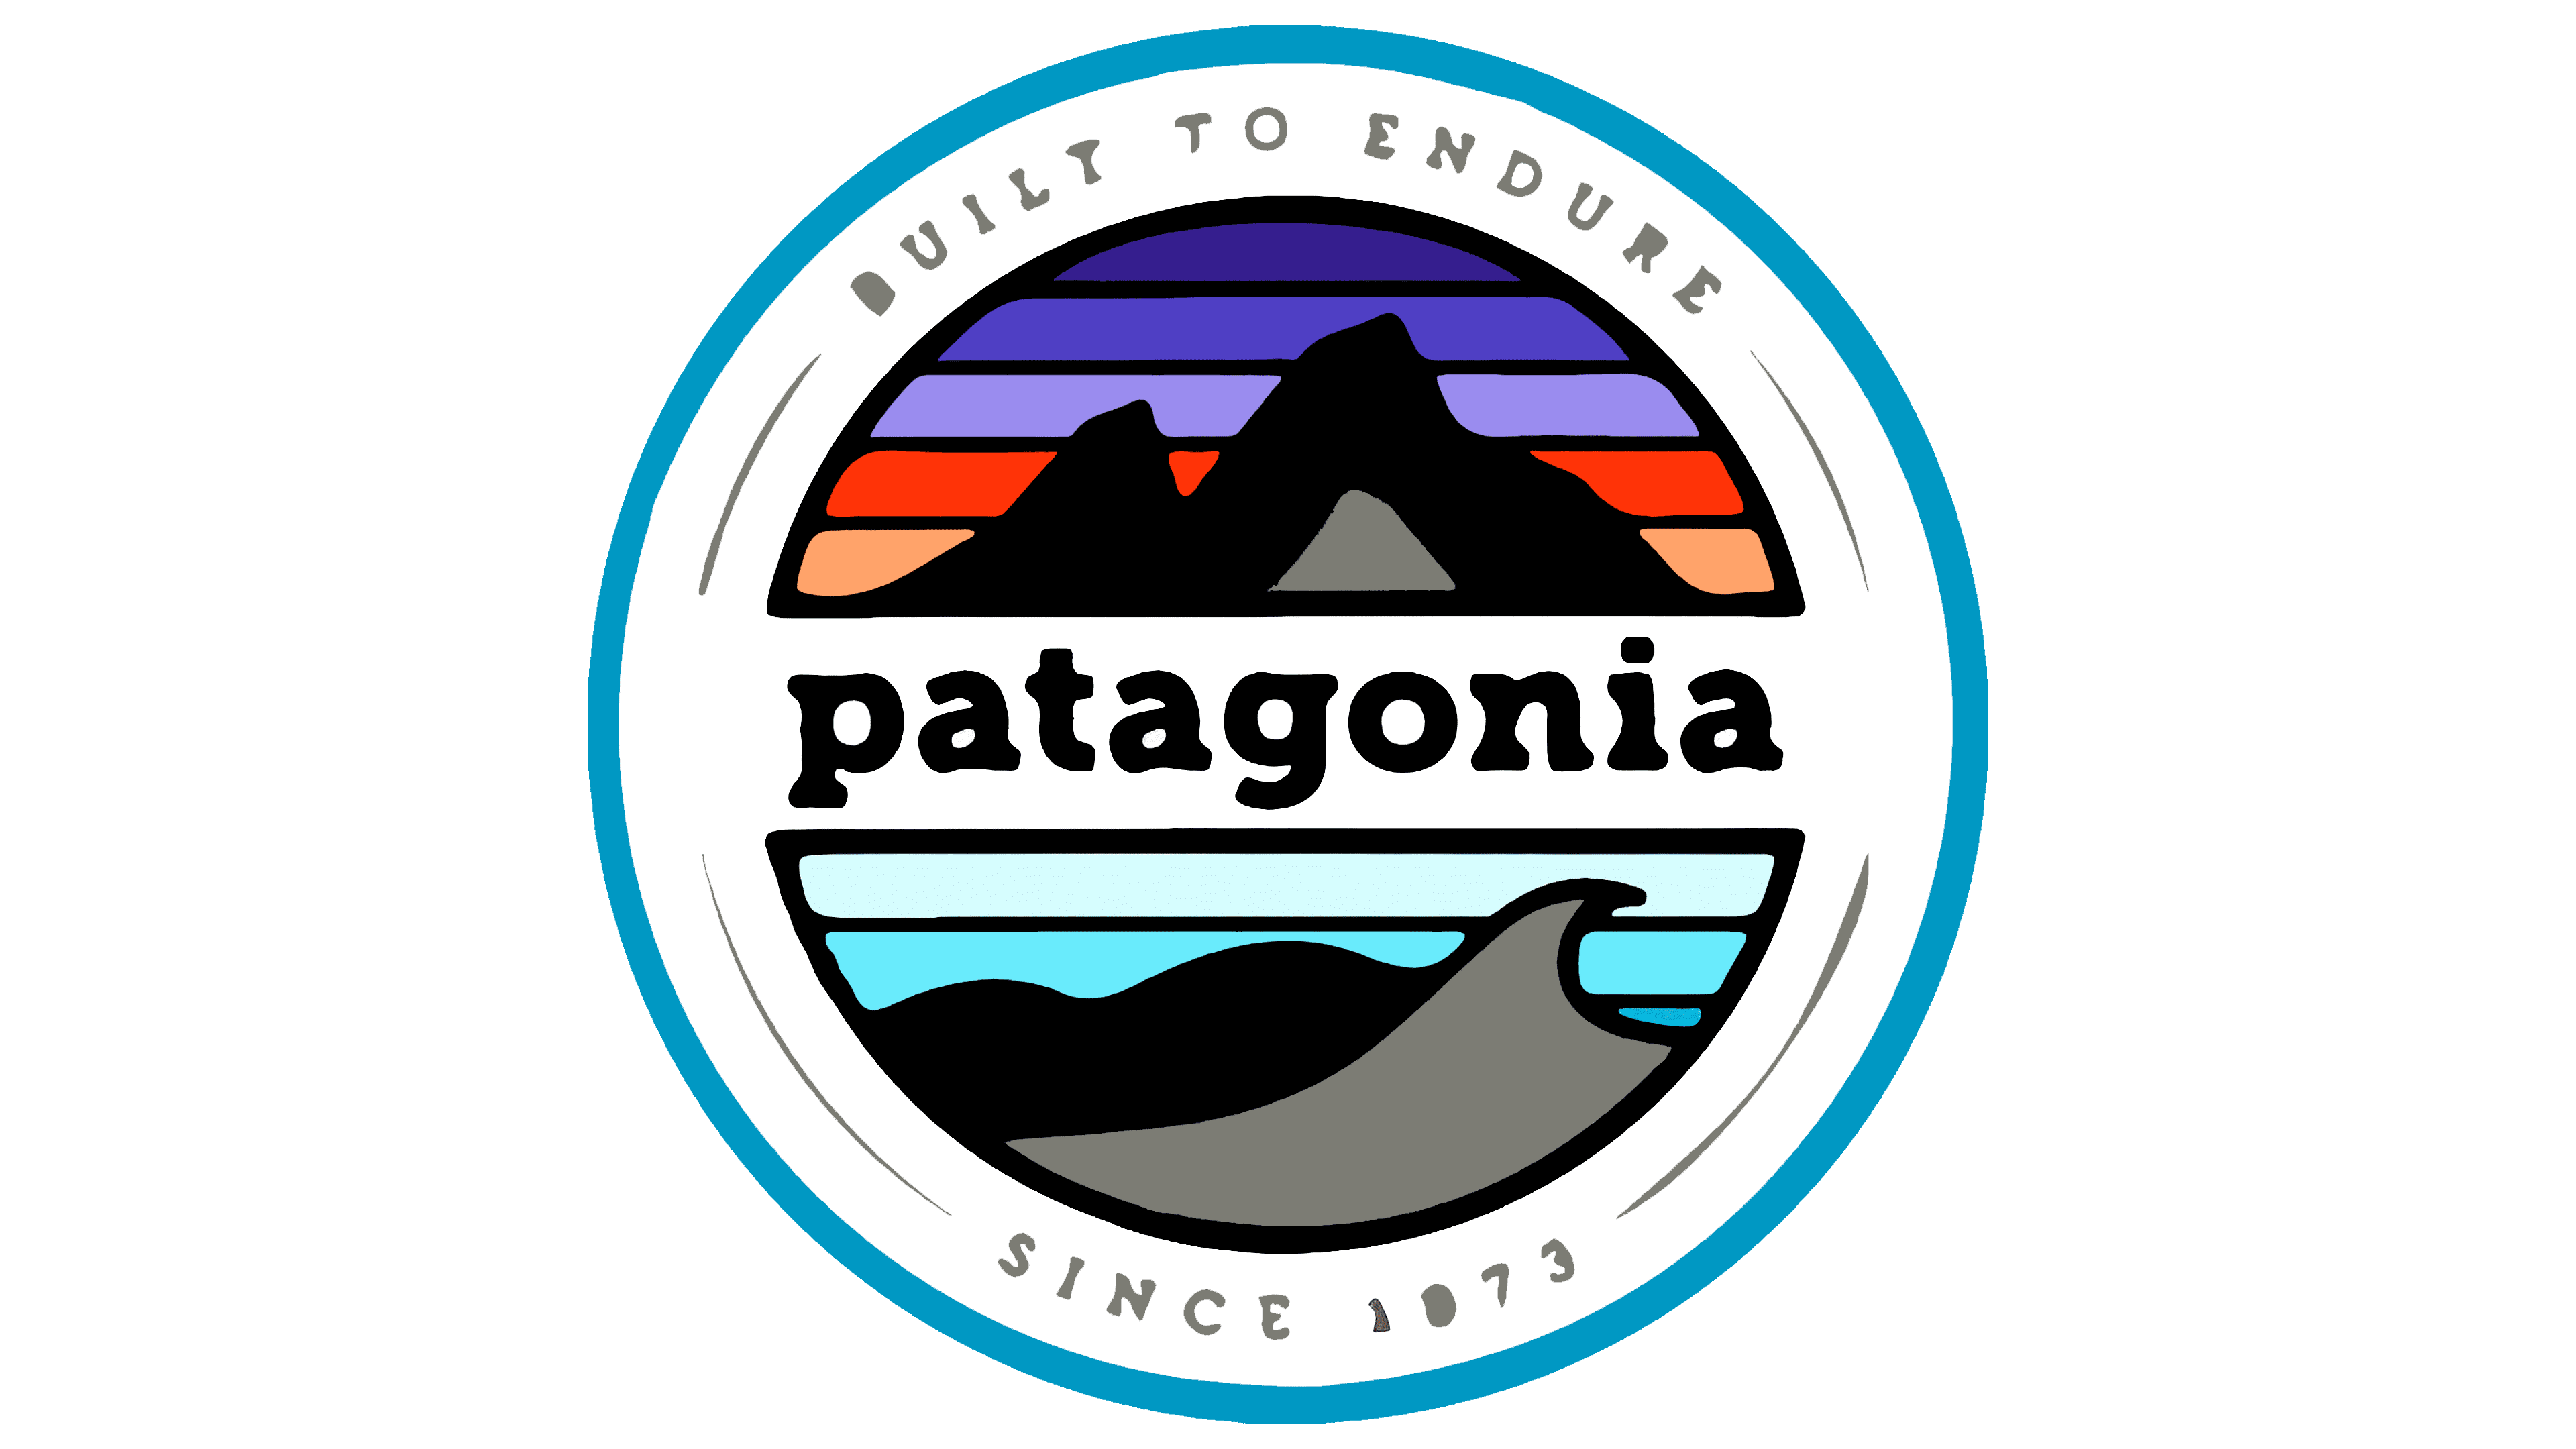 Patagonia Logo And Symbol, Meaning, History, PNG, Brand | eduaspirant.com